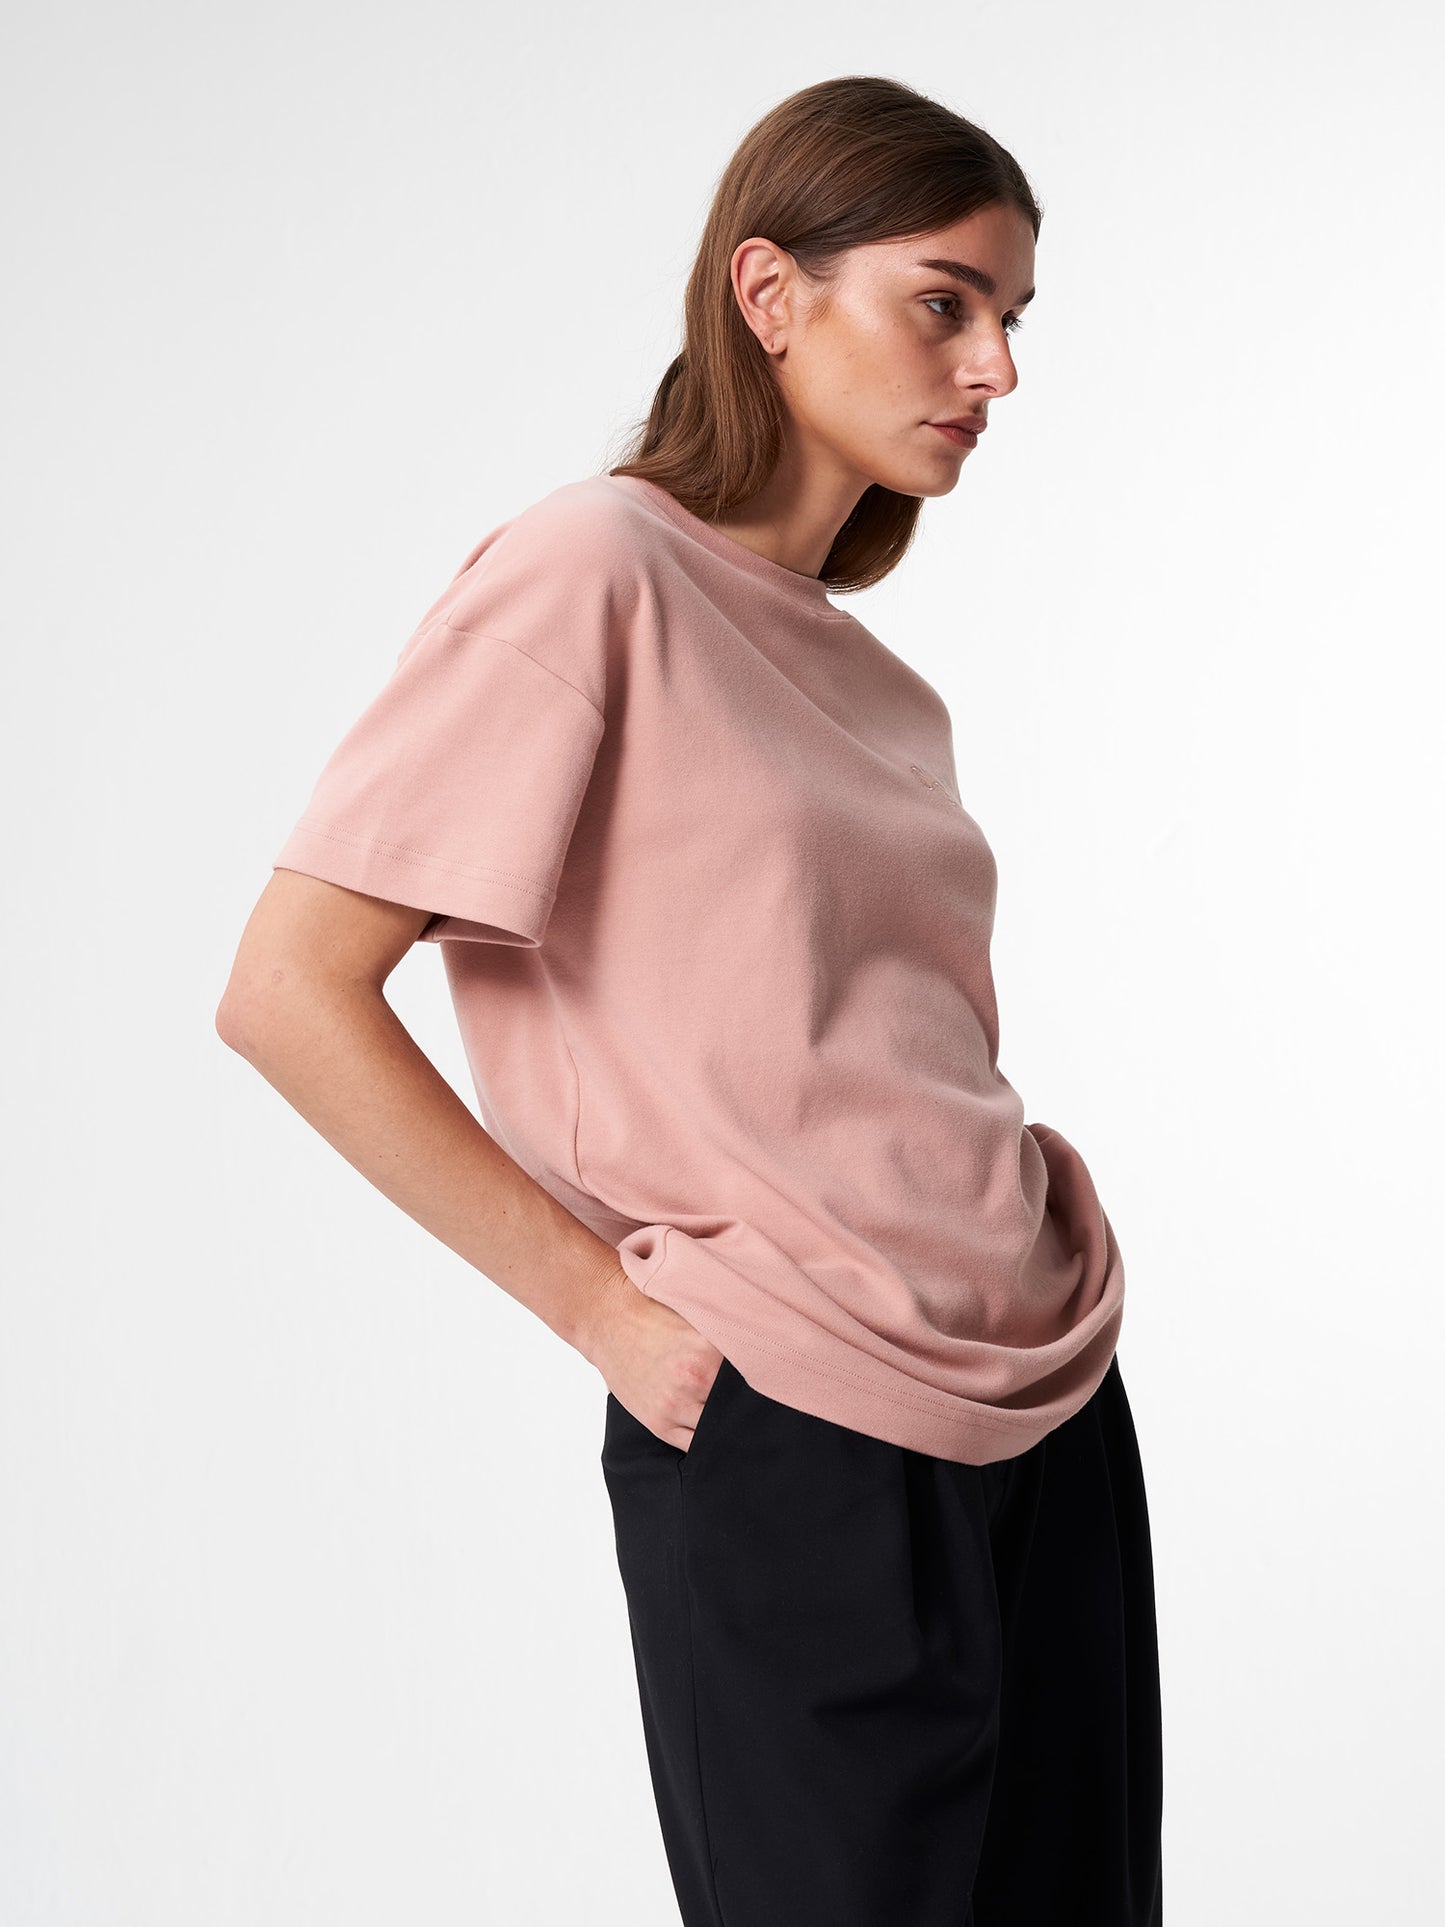 pinqponq-Tshirt-Unisex-Ash-Pink-model-front